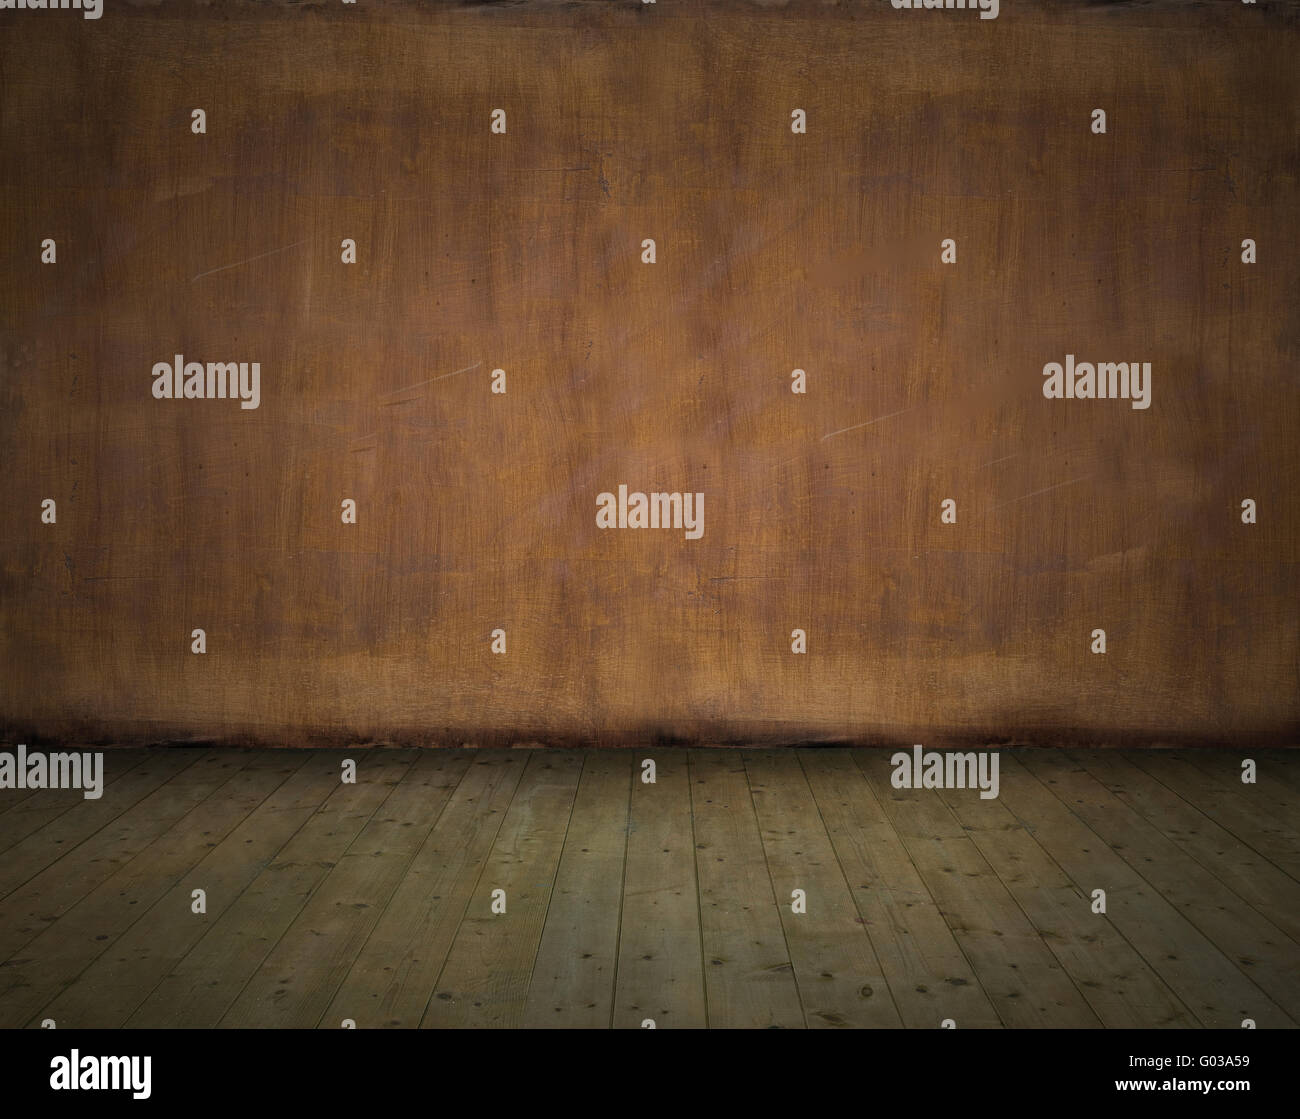 Grunge abstrakte leeren Raum - Innenraum Hintergrundbild Stockfoto